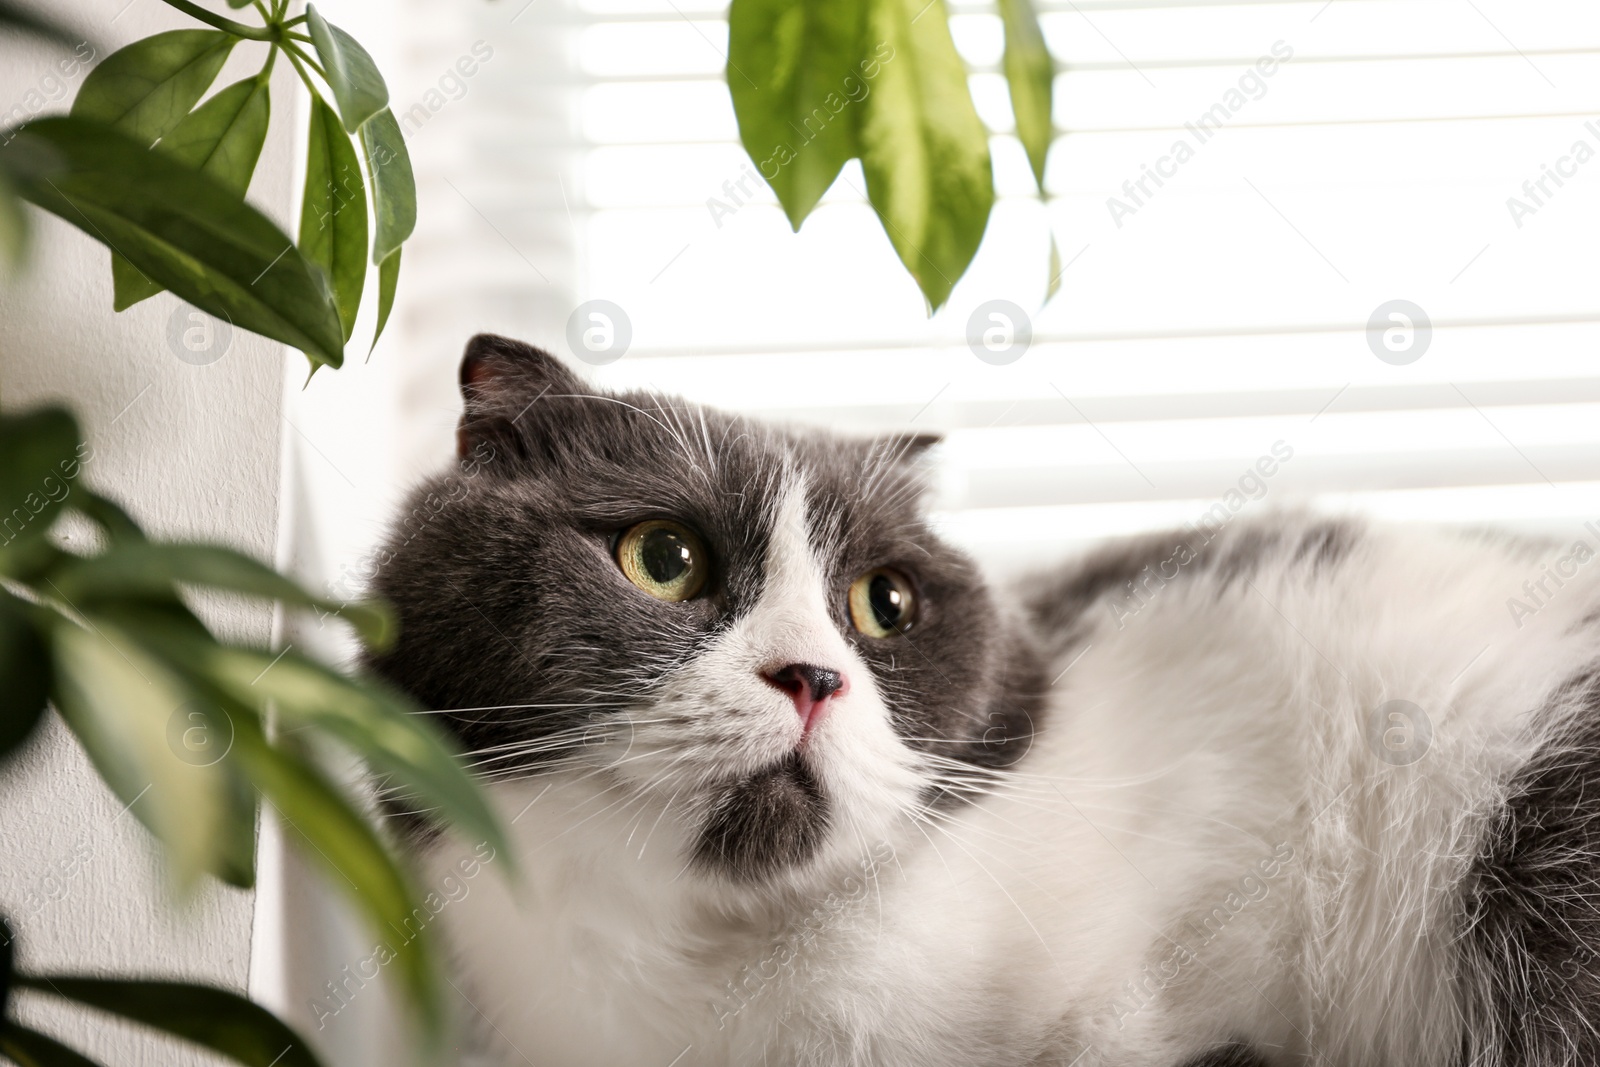 Photo of Cute fluffy cat near window blinds, closeup